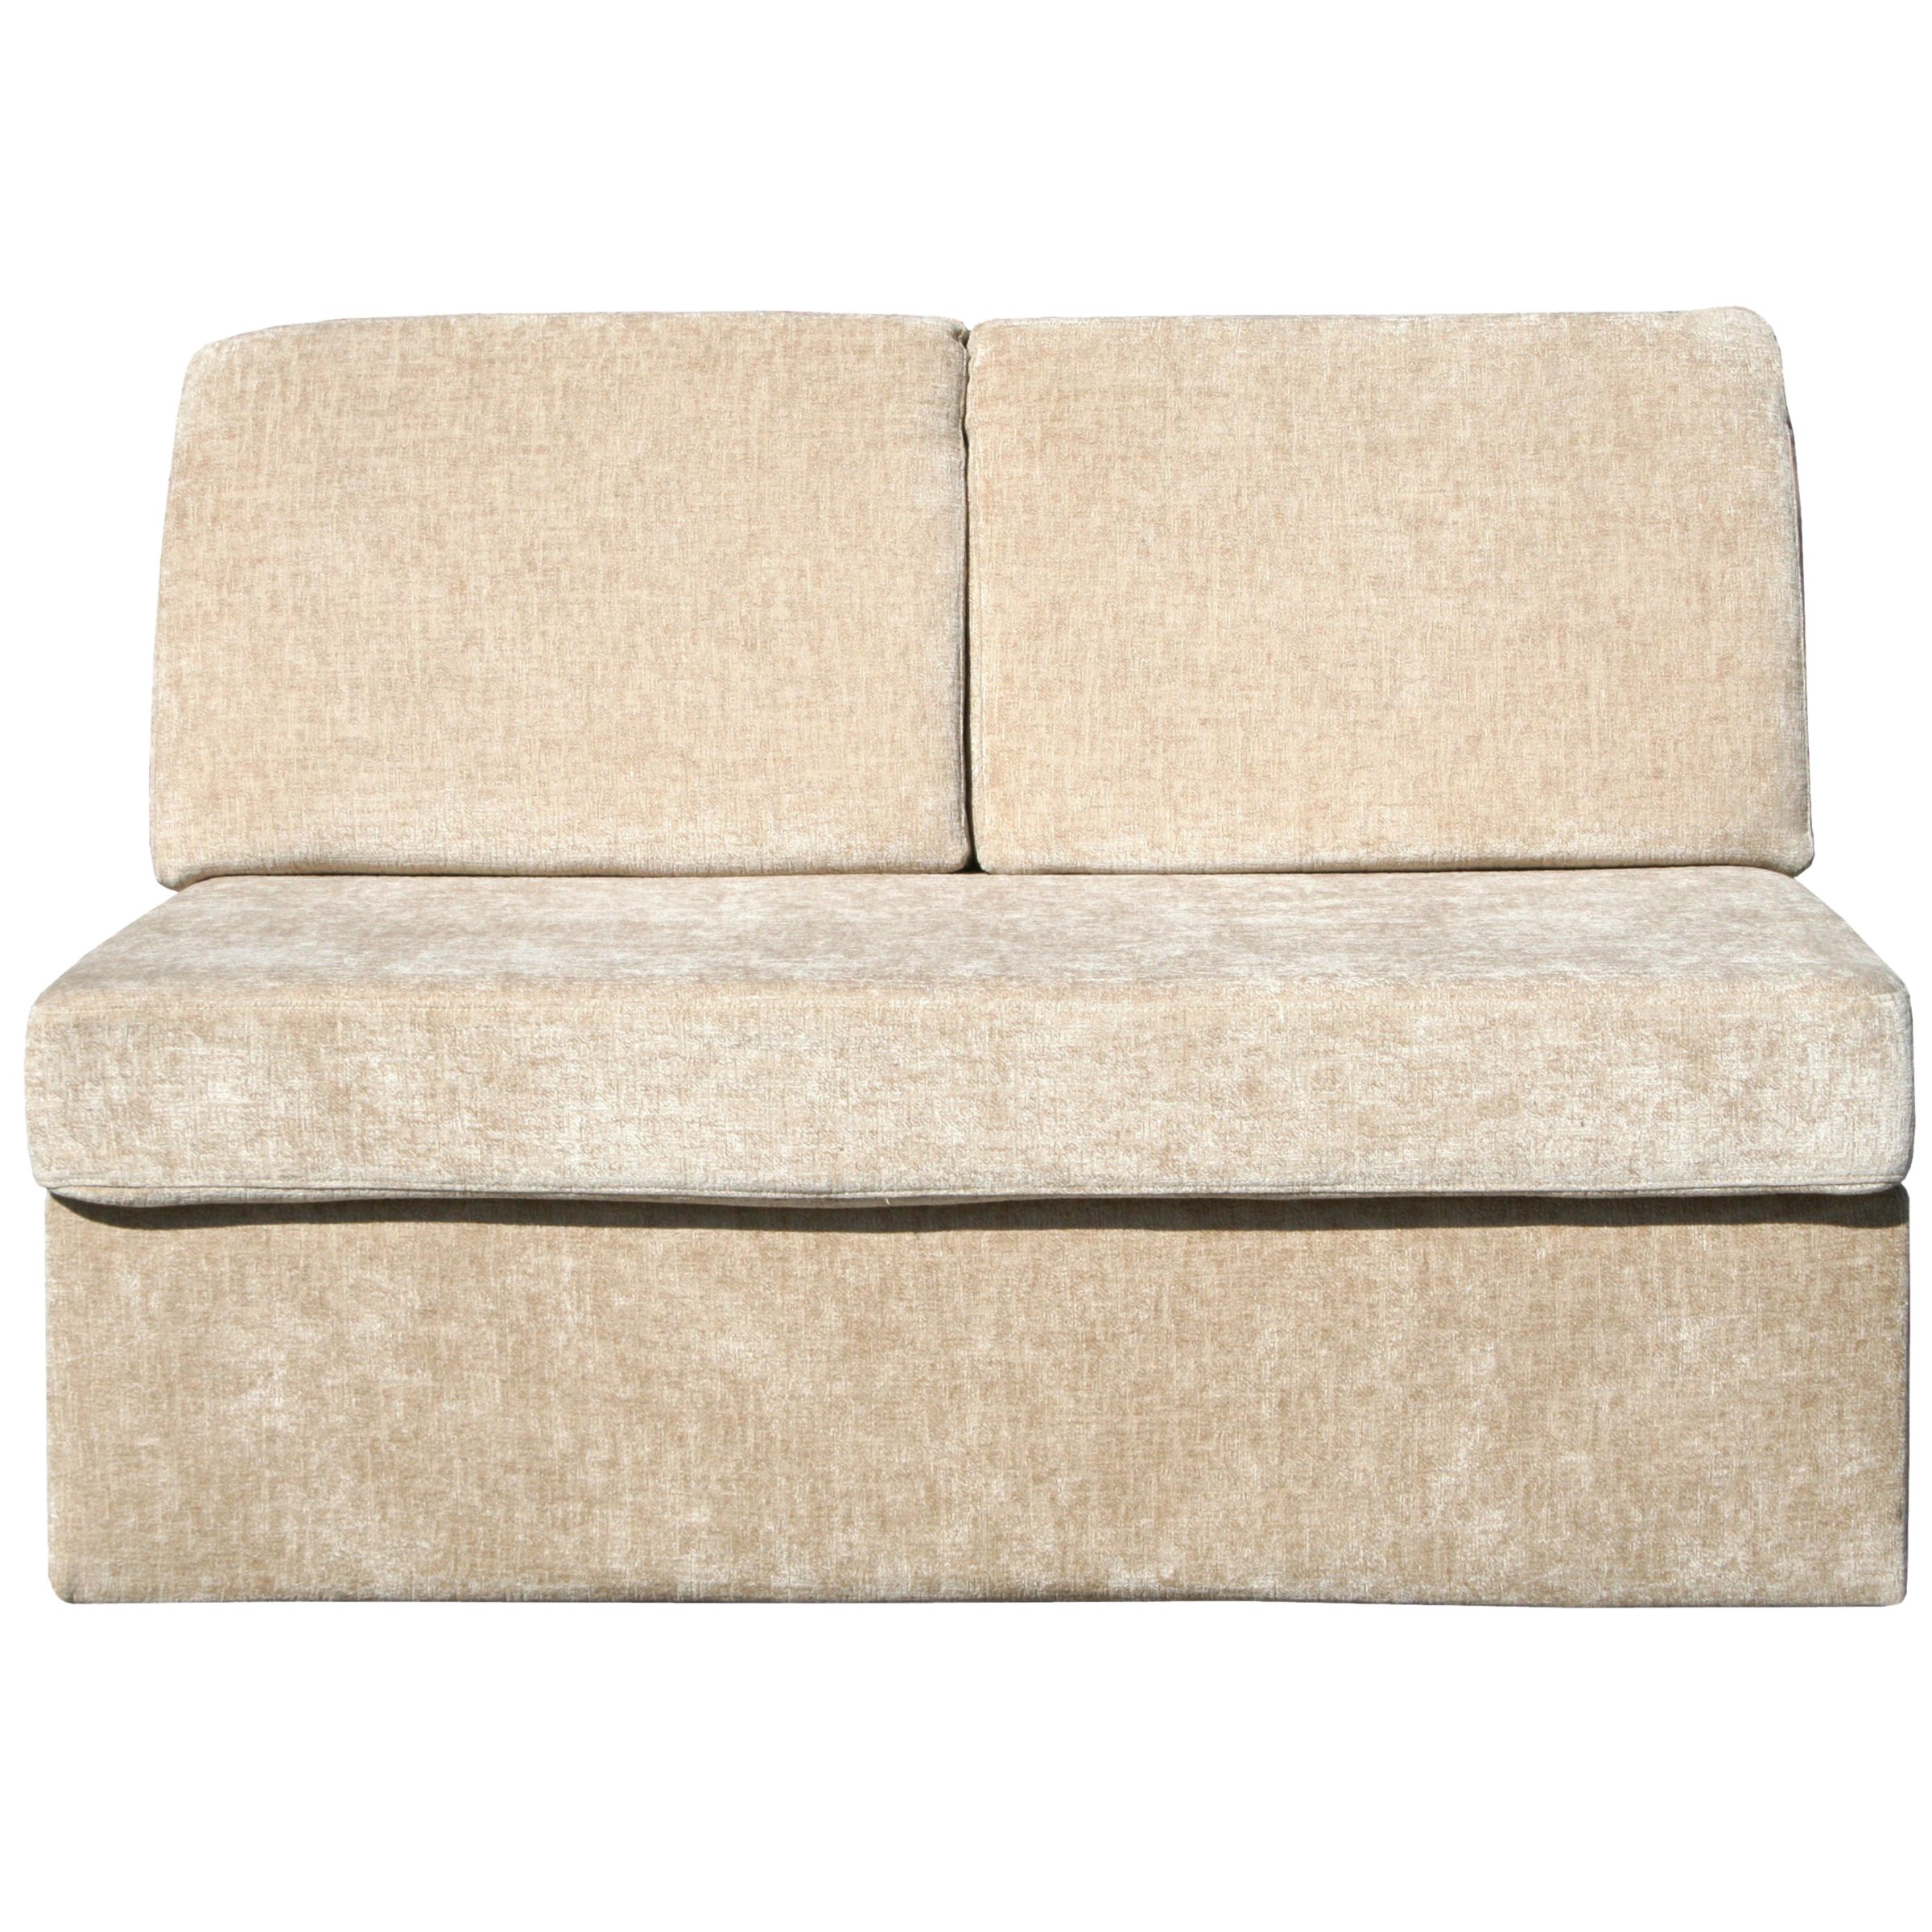 John Lewis Barney Sofa Bed, Sandstone at John Lewis